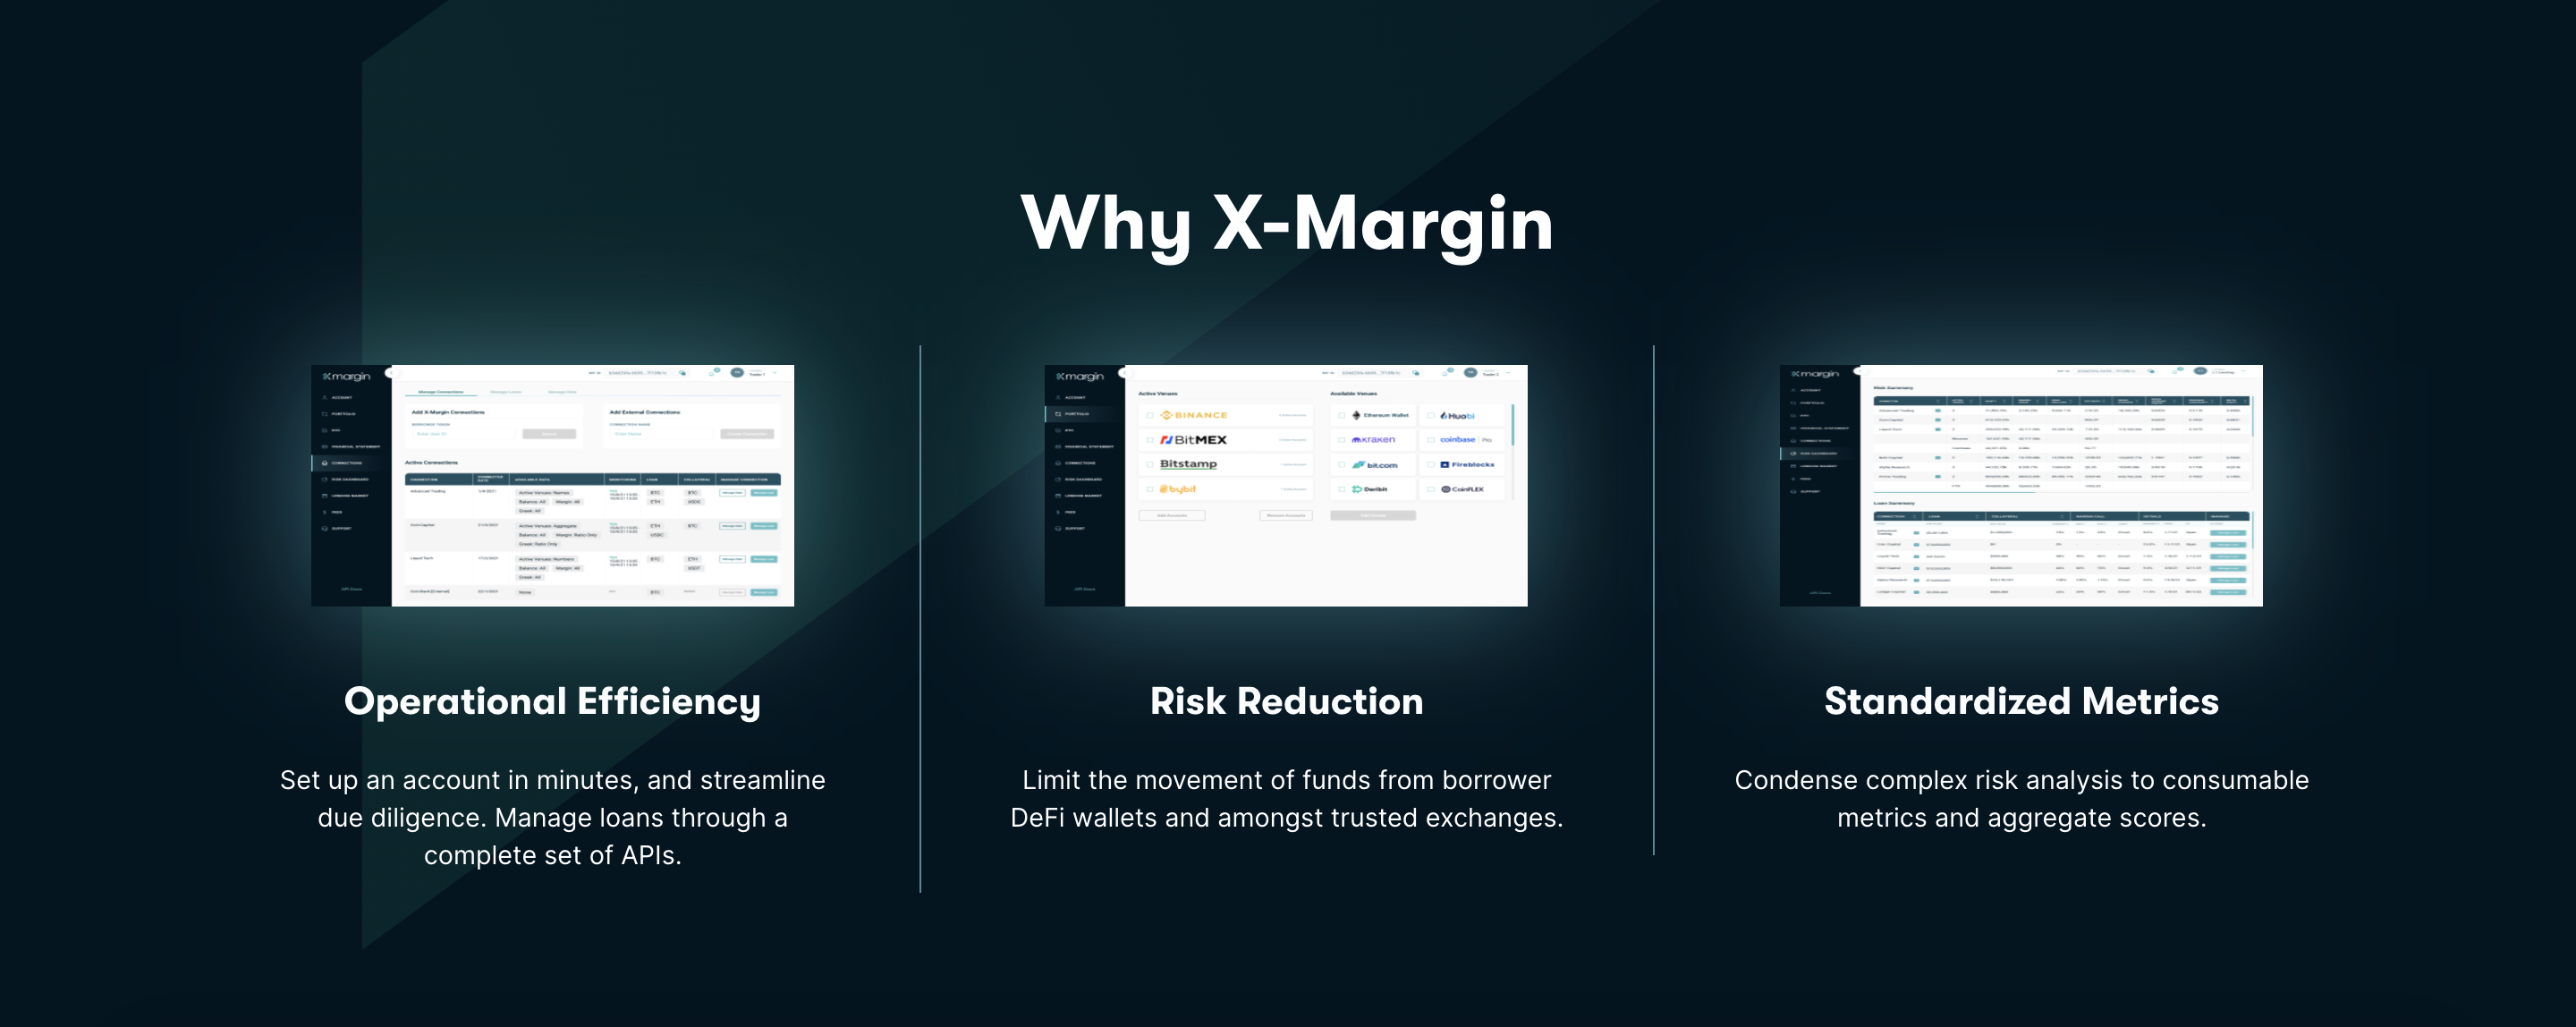 X-Margin Info 2